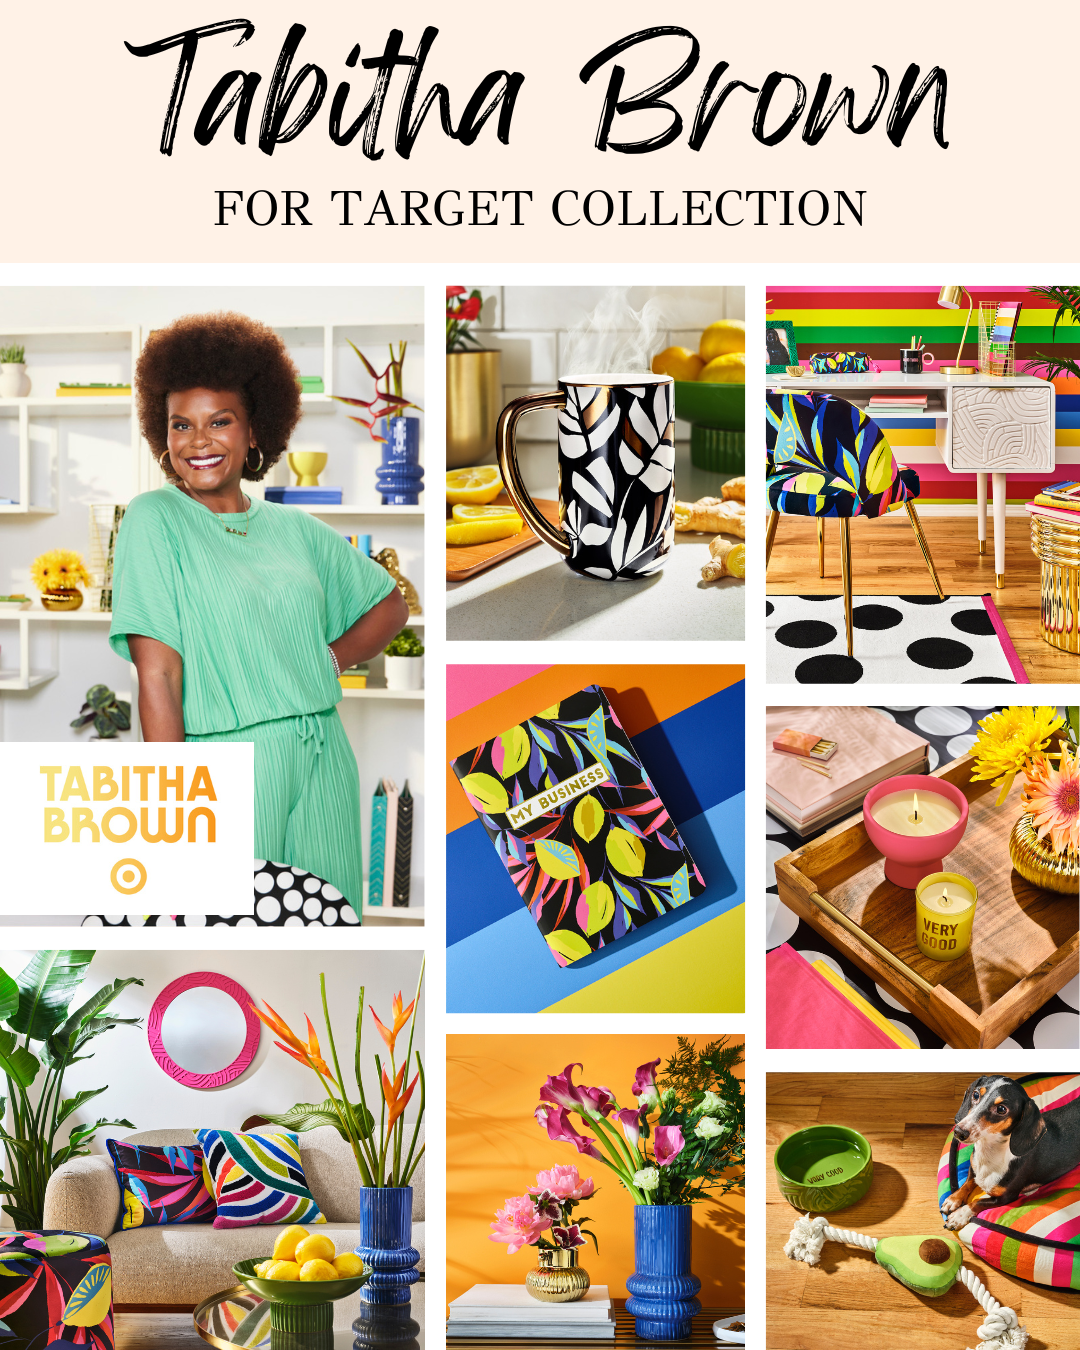 Tabitha Brown's Joyful Target Collection